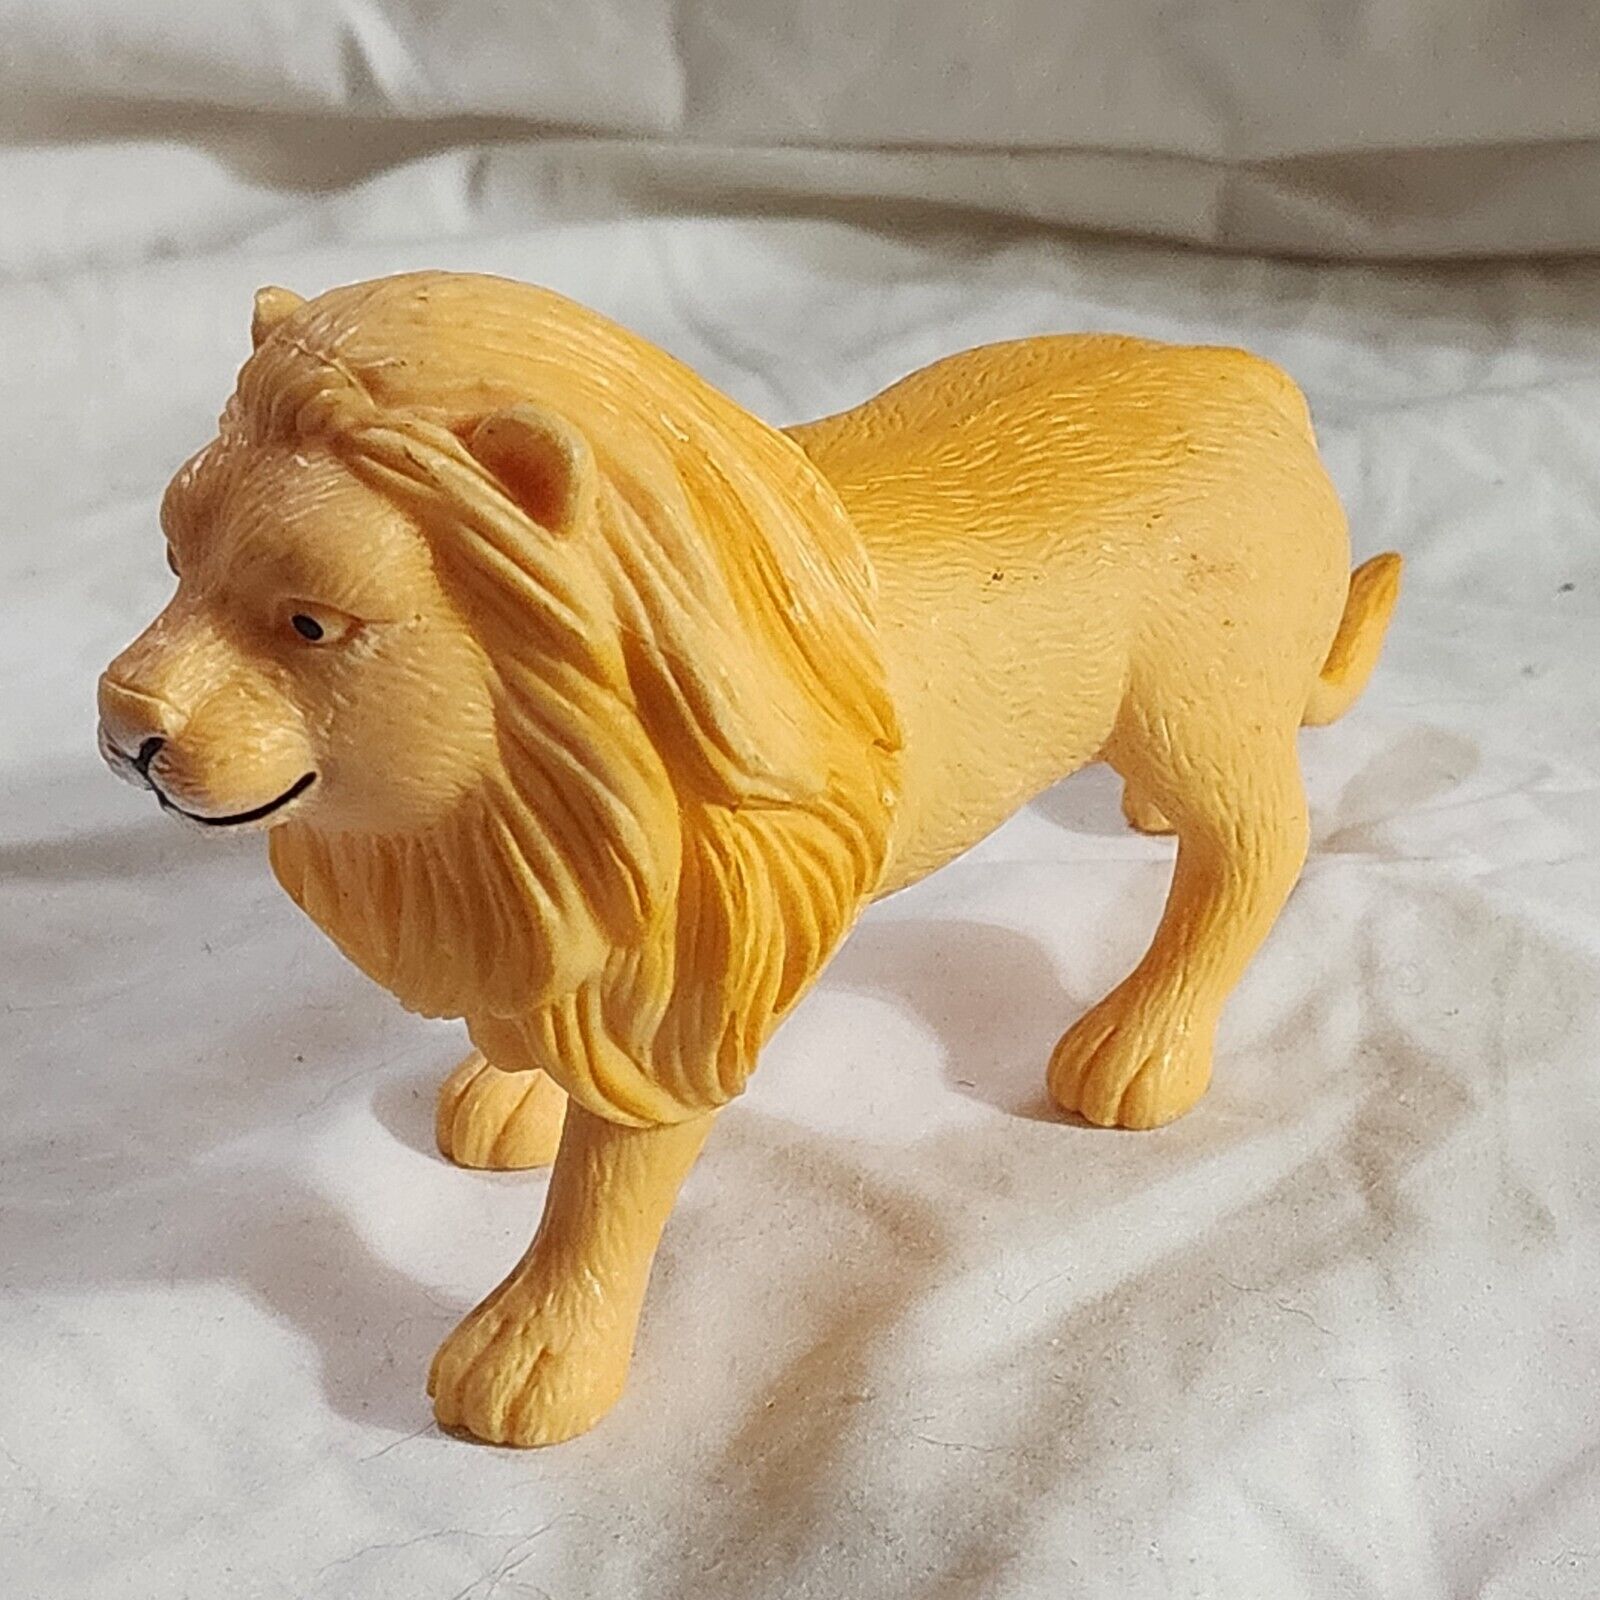 Ankyo Plastic Lion Jungle Animal Golden Orange Figure Toy 3\